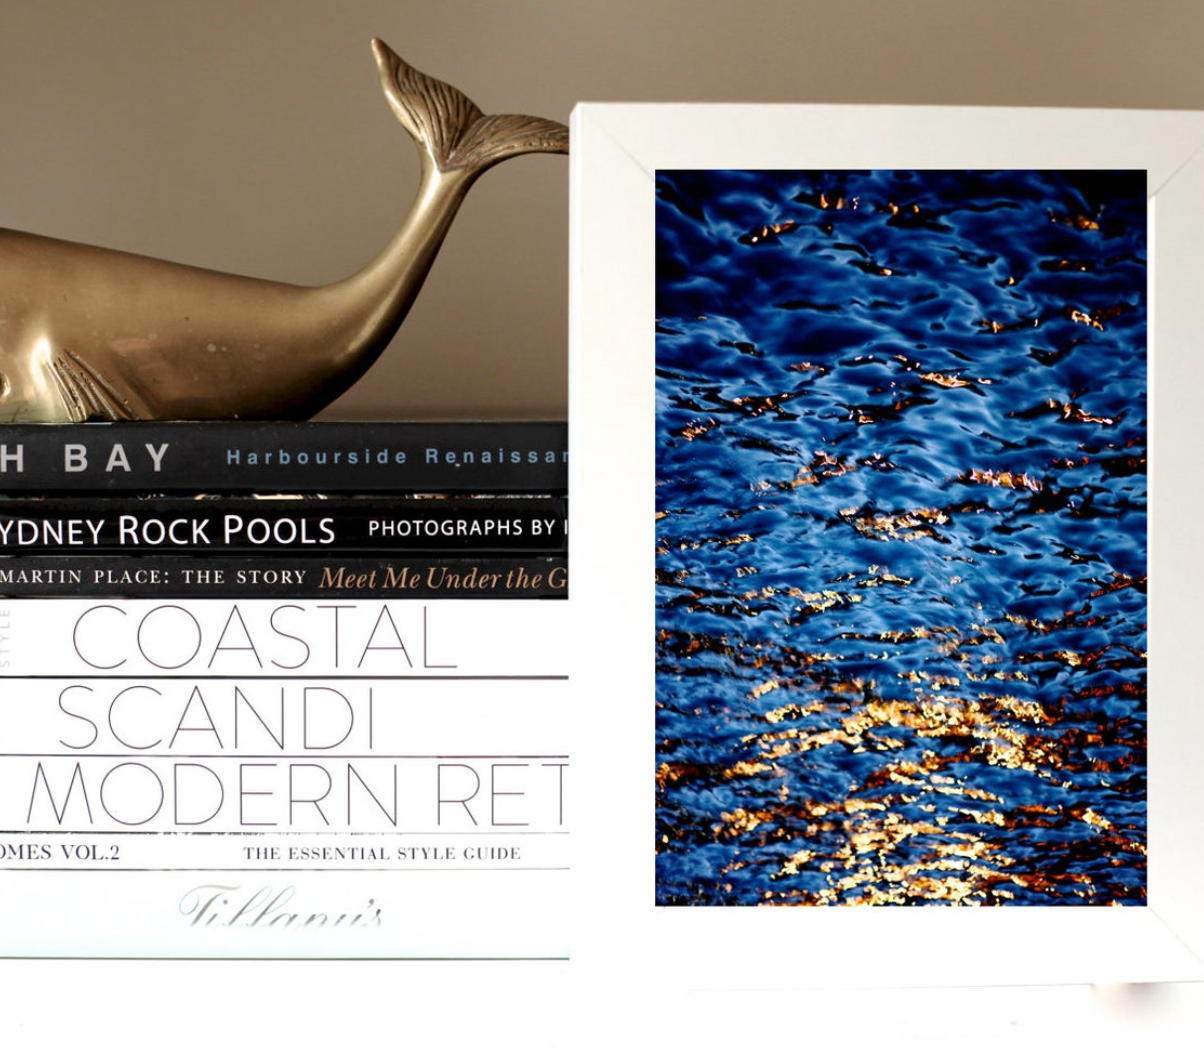 Sydney Harbour Shimmer • Abstract Blue & Gold Fine Print Artwork